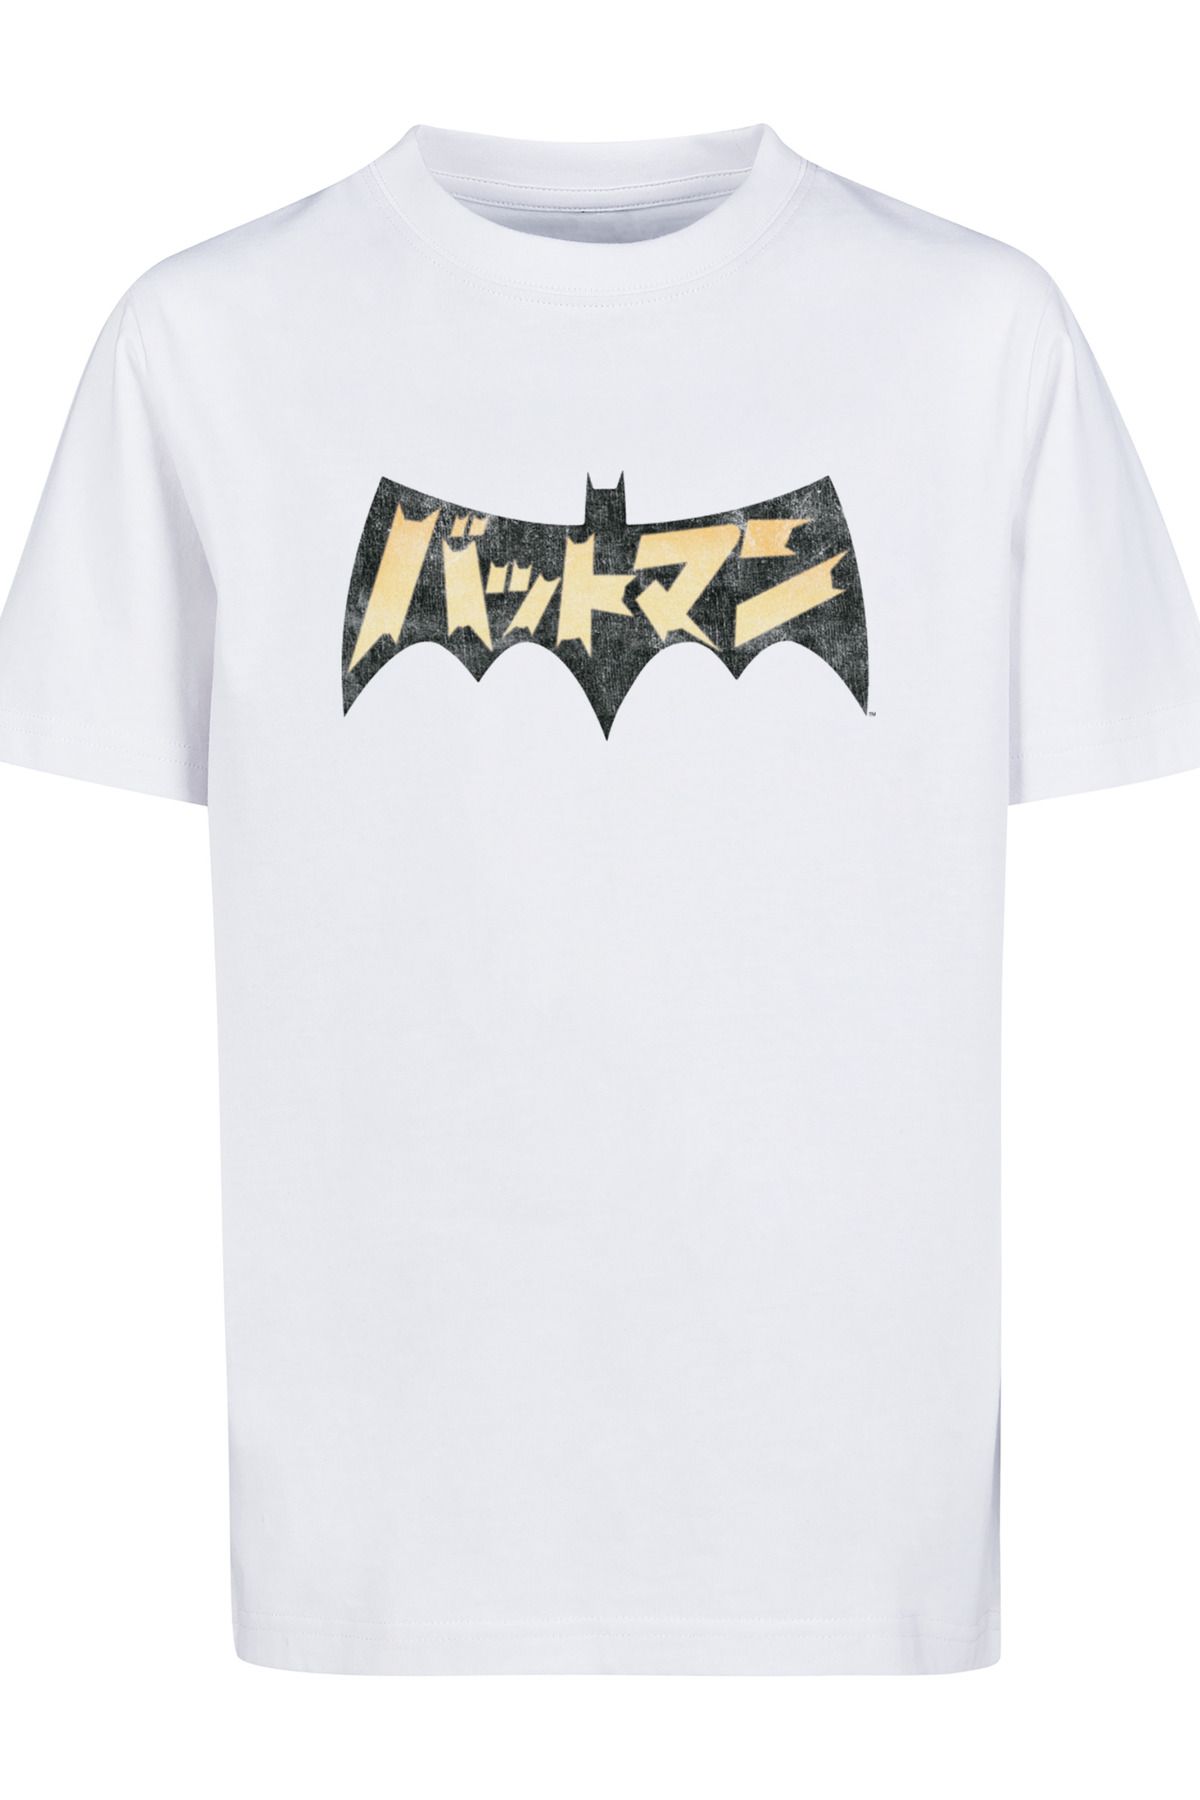 F4NT4STIC Kinder DC International Logo-WHT Trendyol T- Batman mit - Kids Comics Shirt Basic